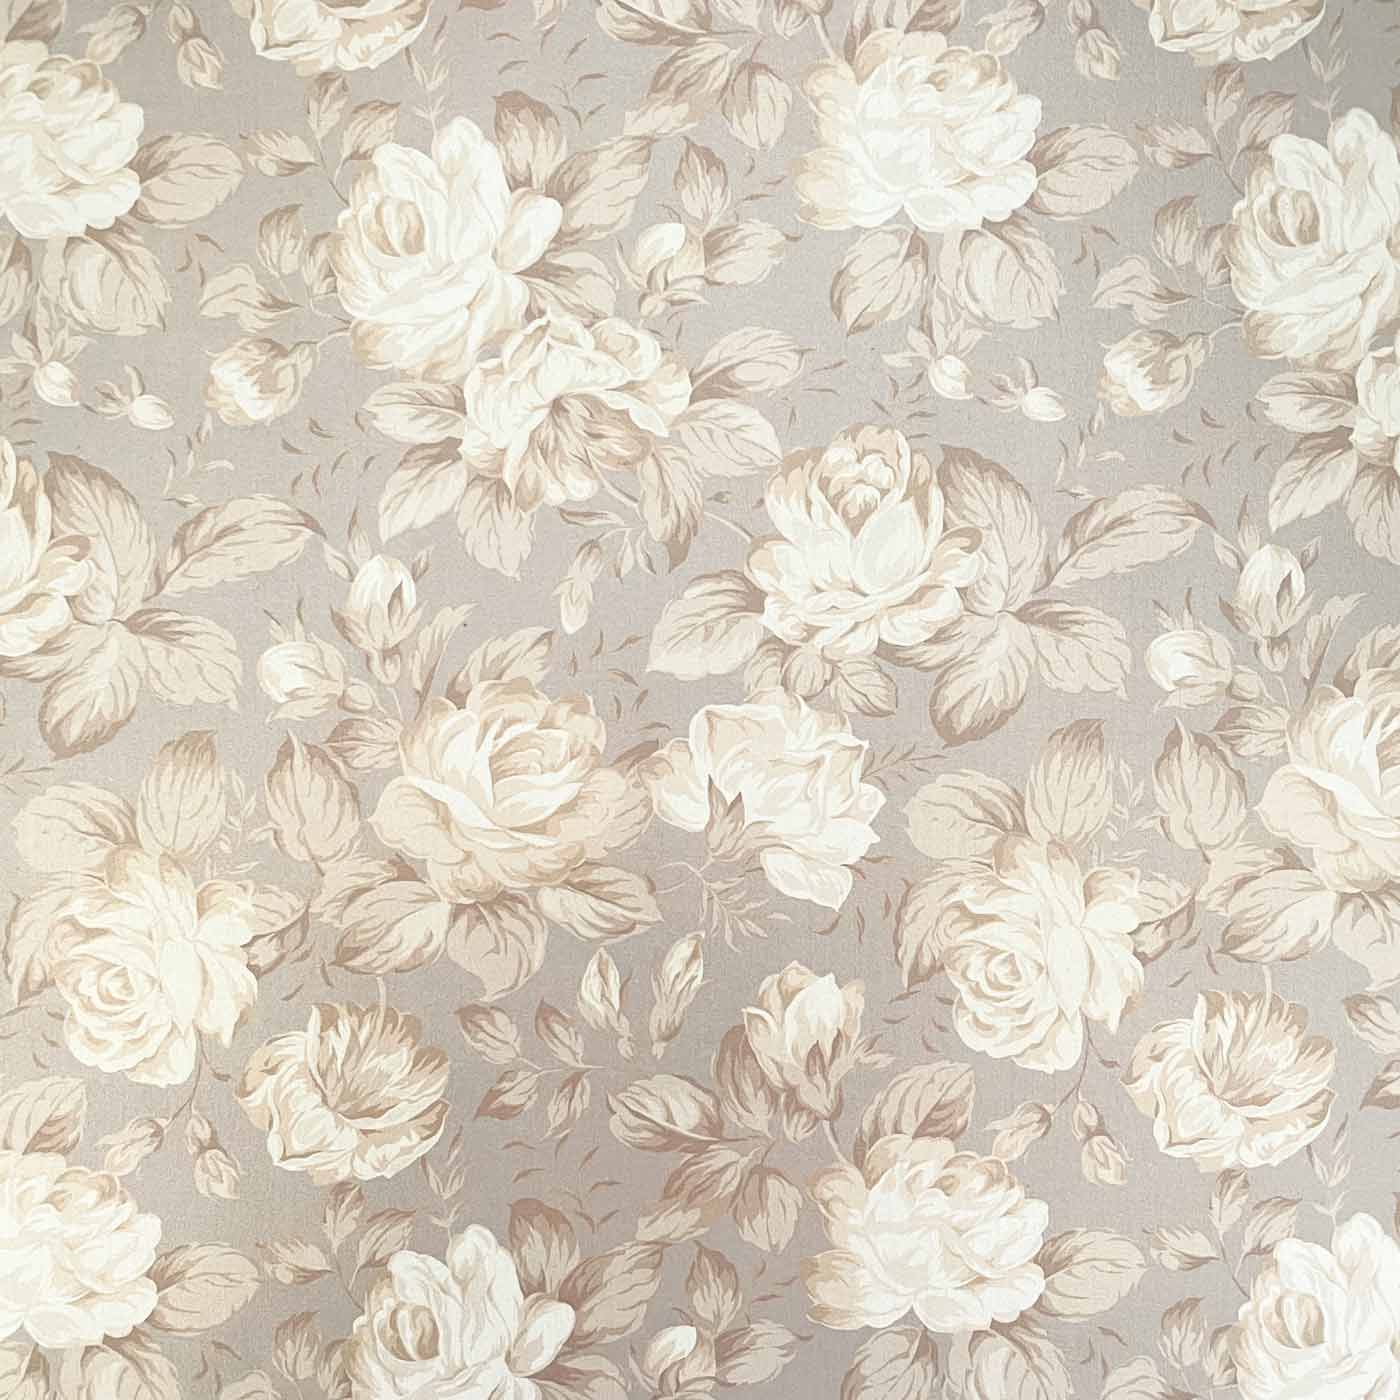 woburn-neautral-floral-pattern-decorative-paper